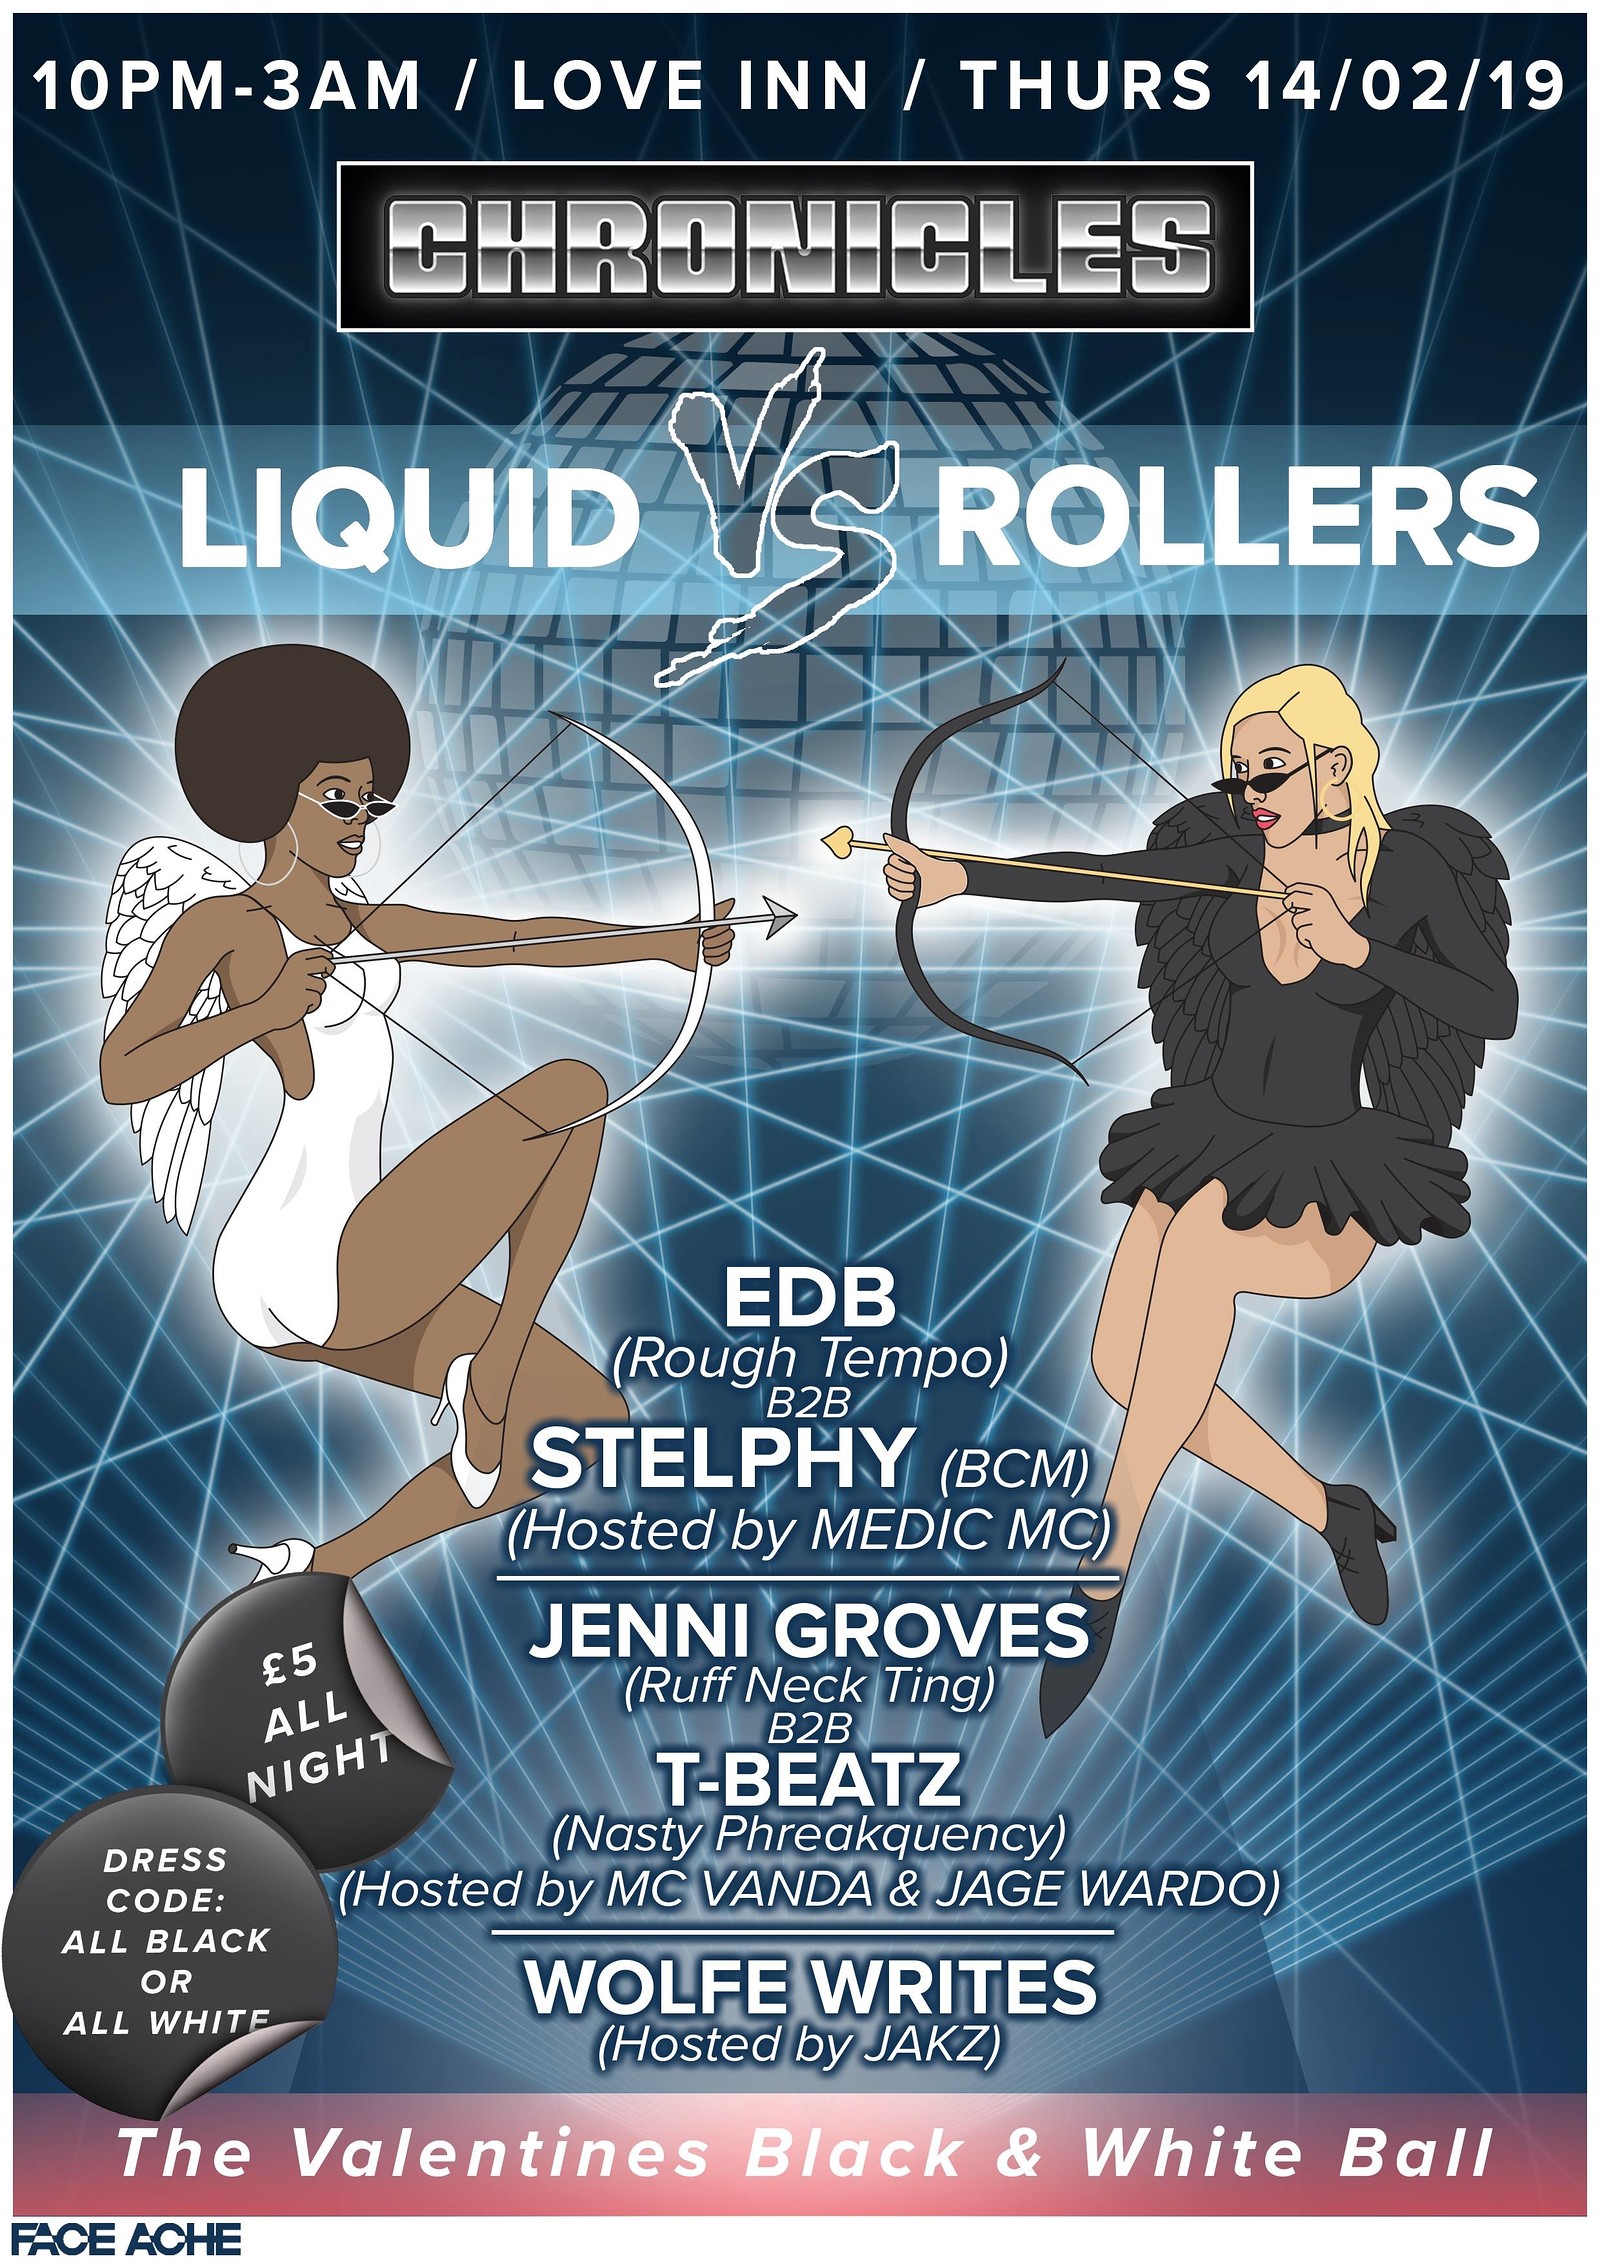 Liquid VS Rollers- The Black & White Ball at The Love Inn